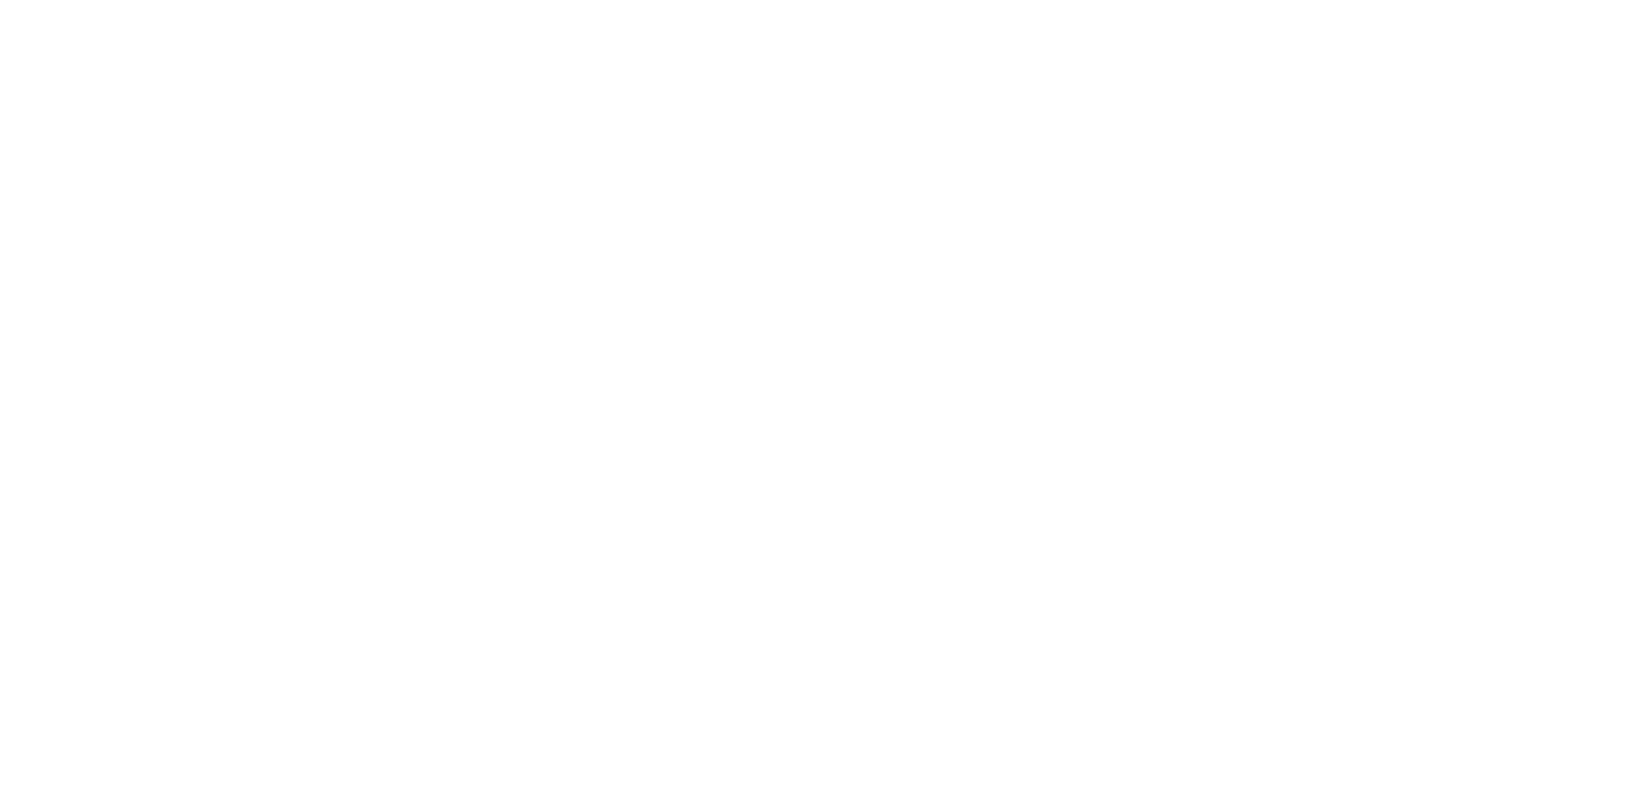 ZFG